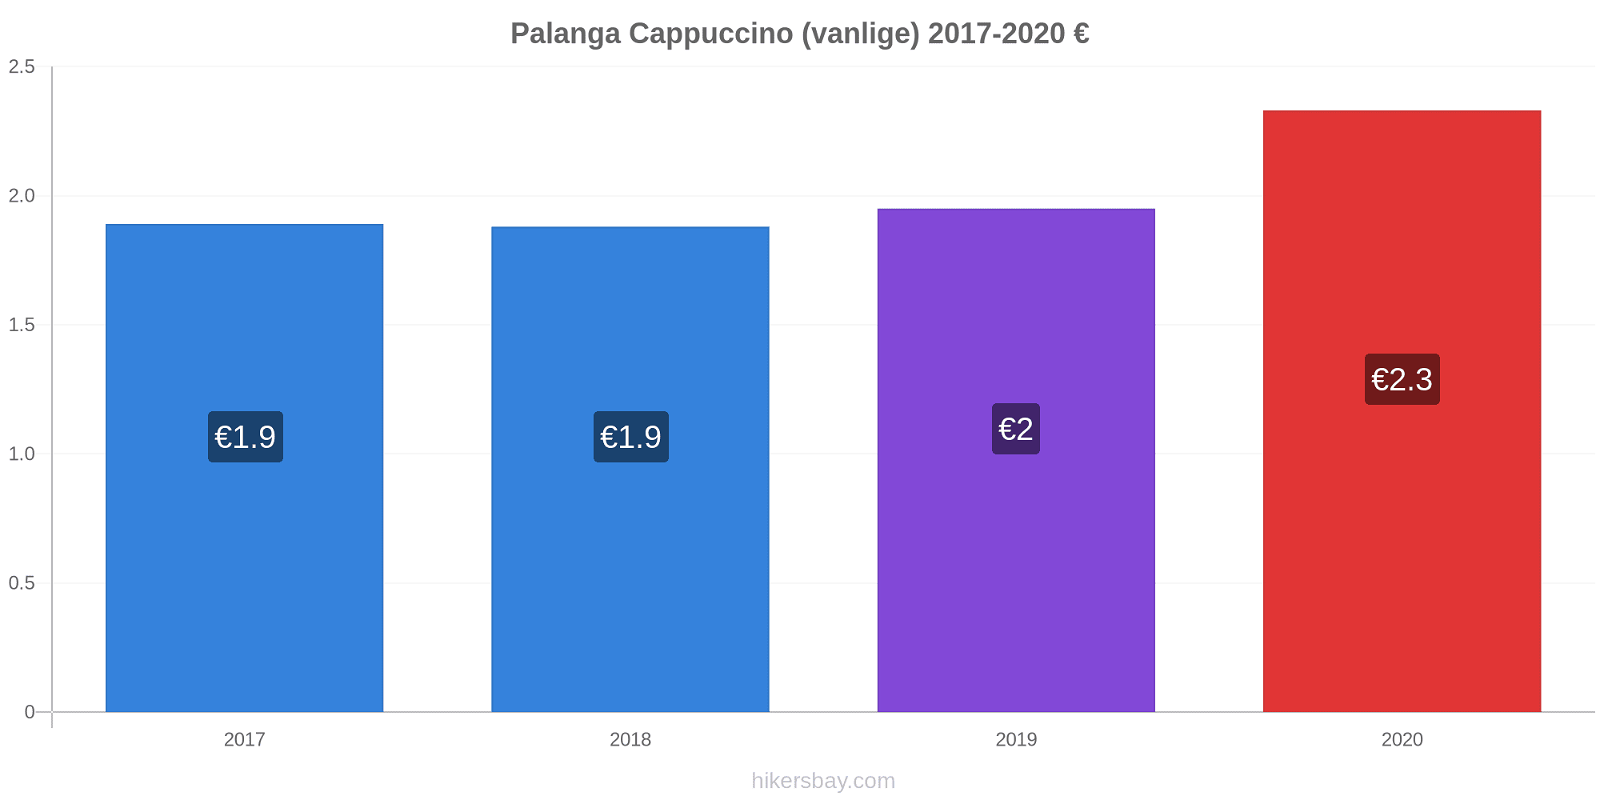 Palanga prisendringer Cappuccino (vanlige) hikersbay.com